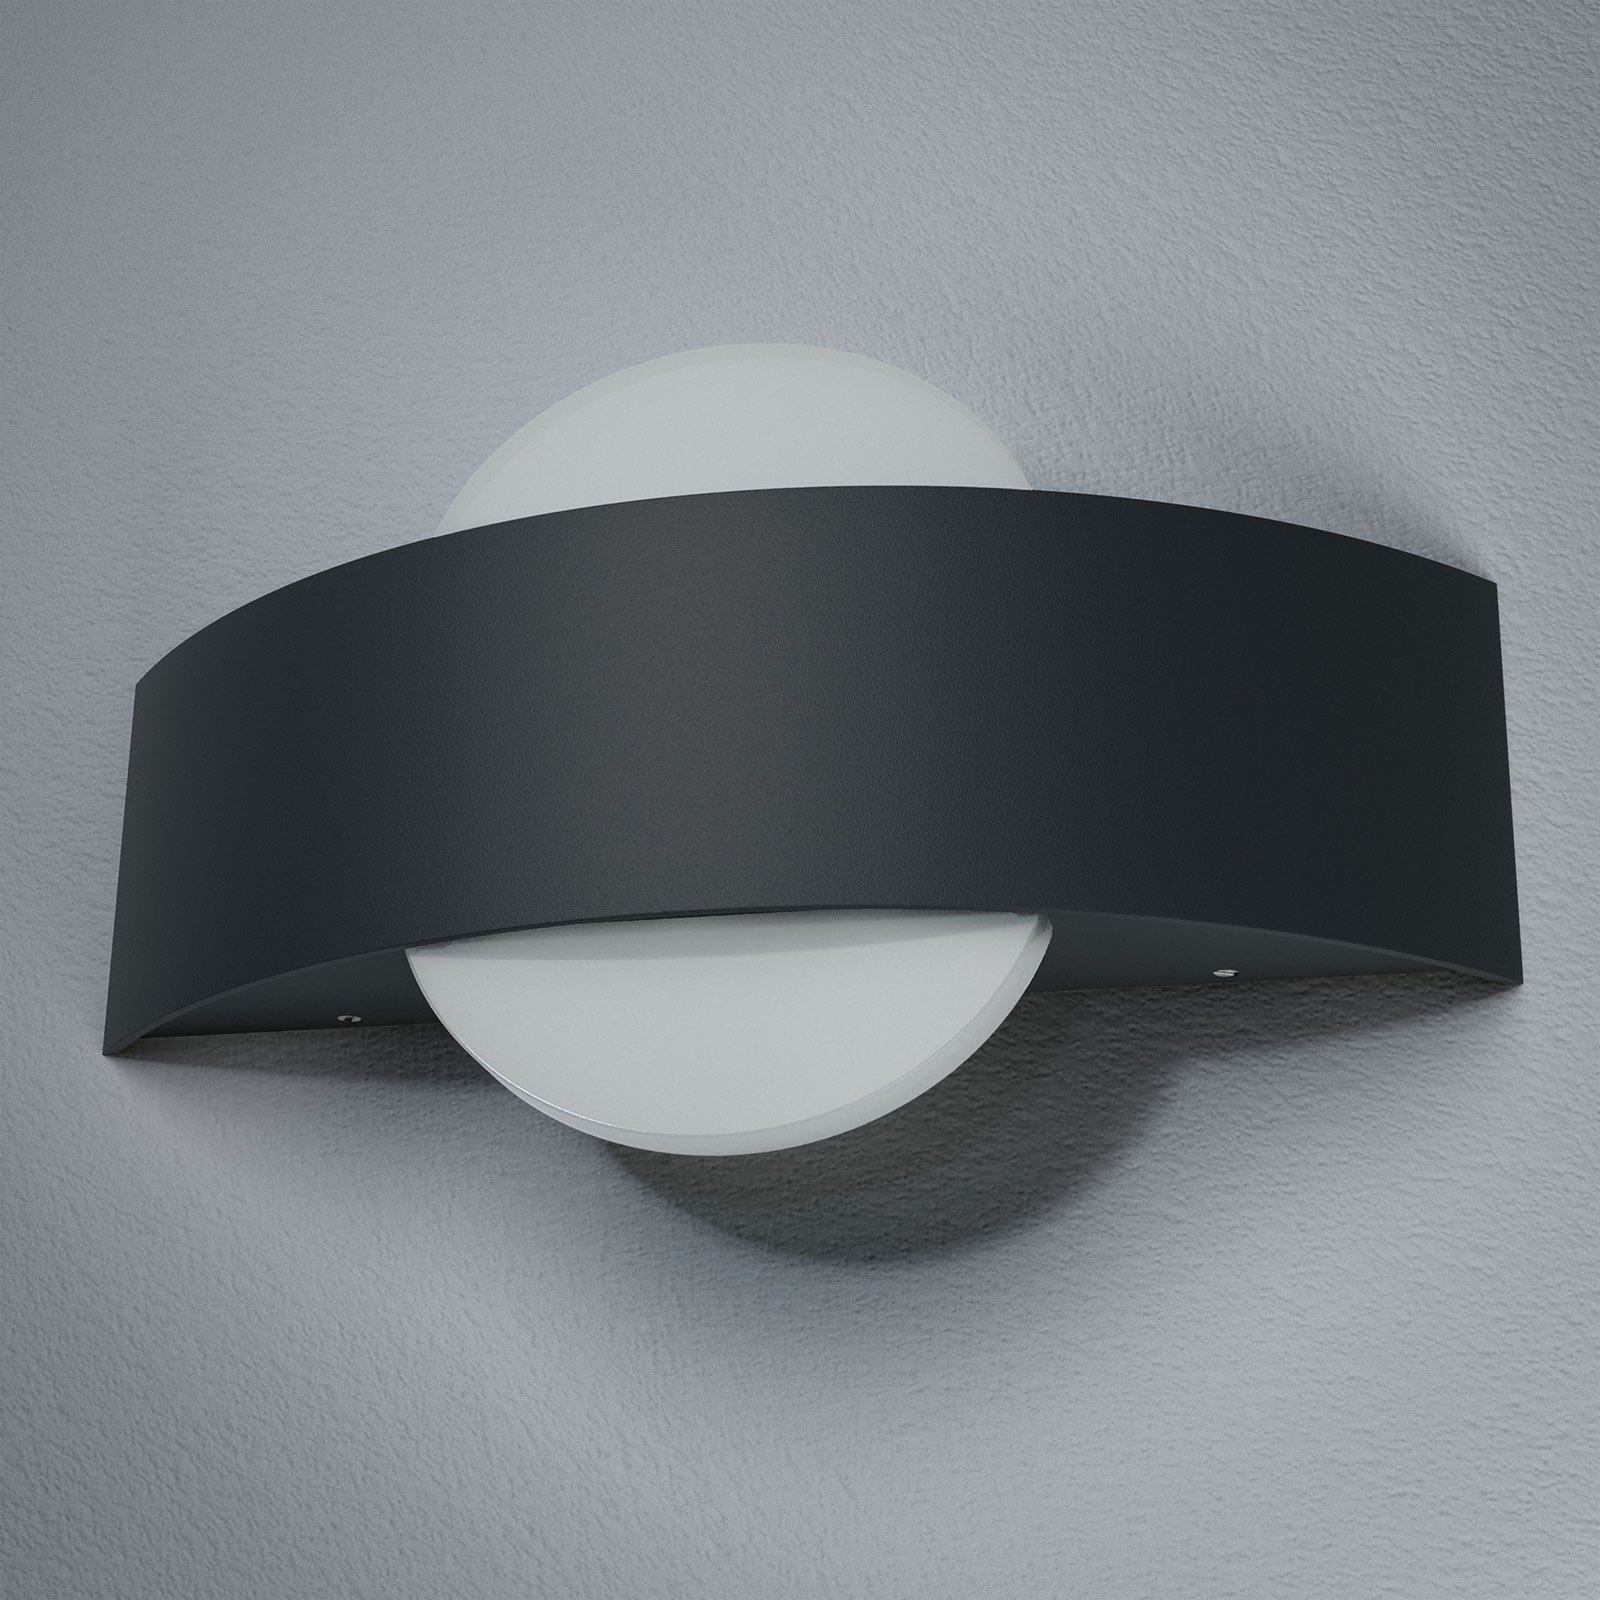 LEDVANCE Endura Style Shield Round Außenwandlampe